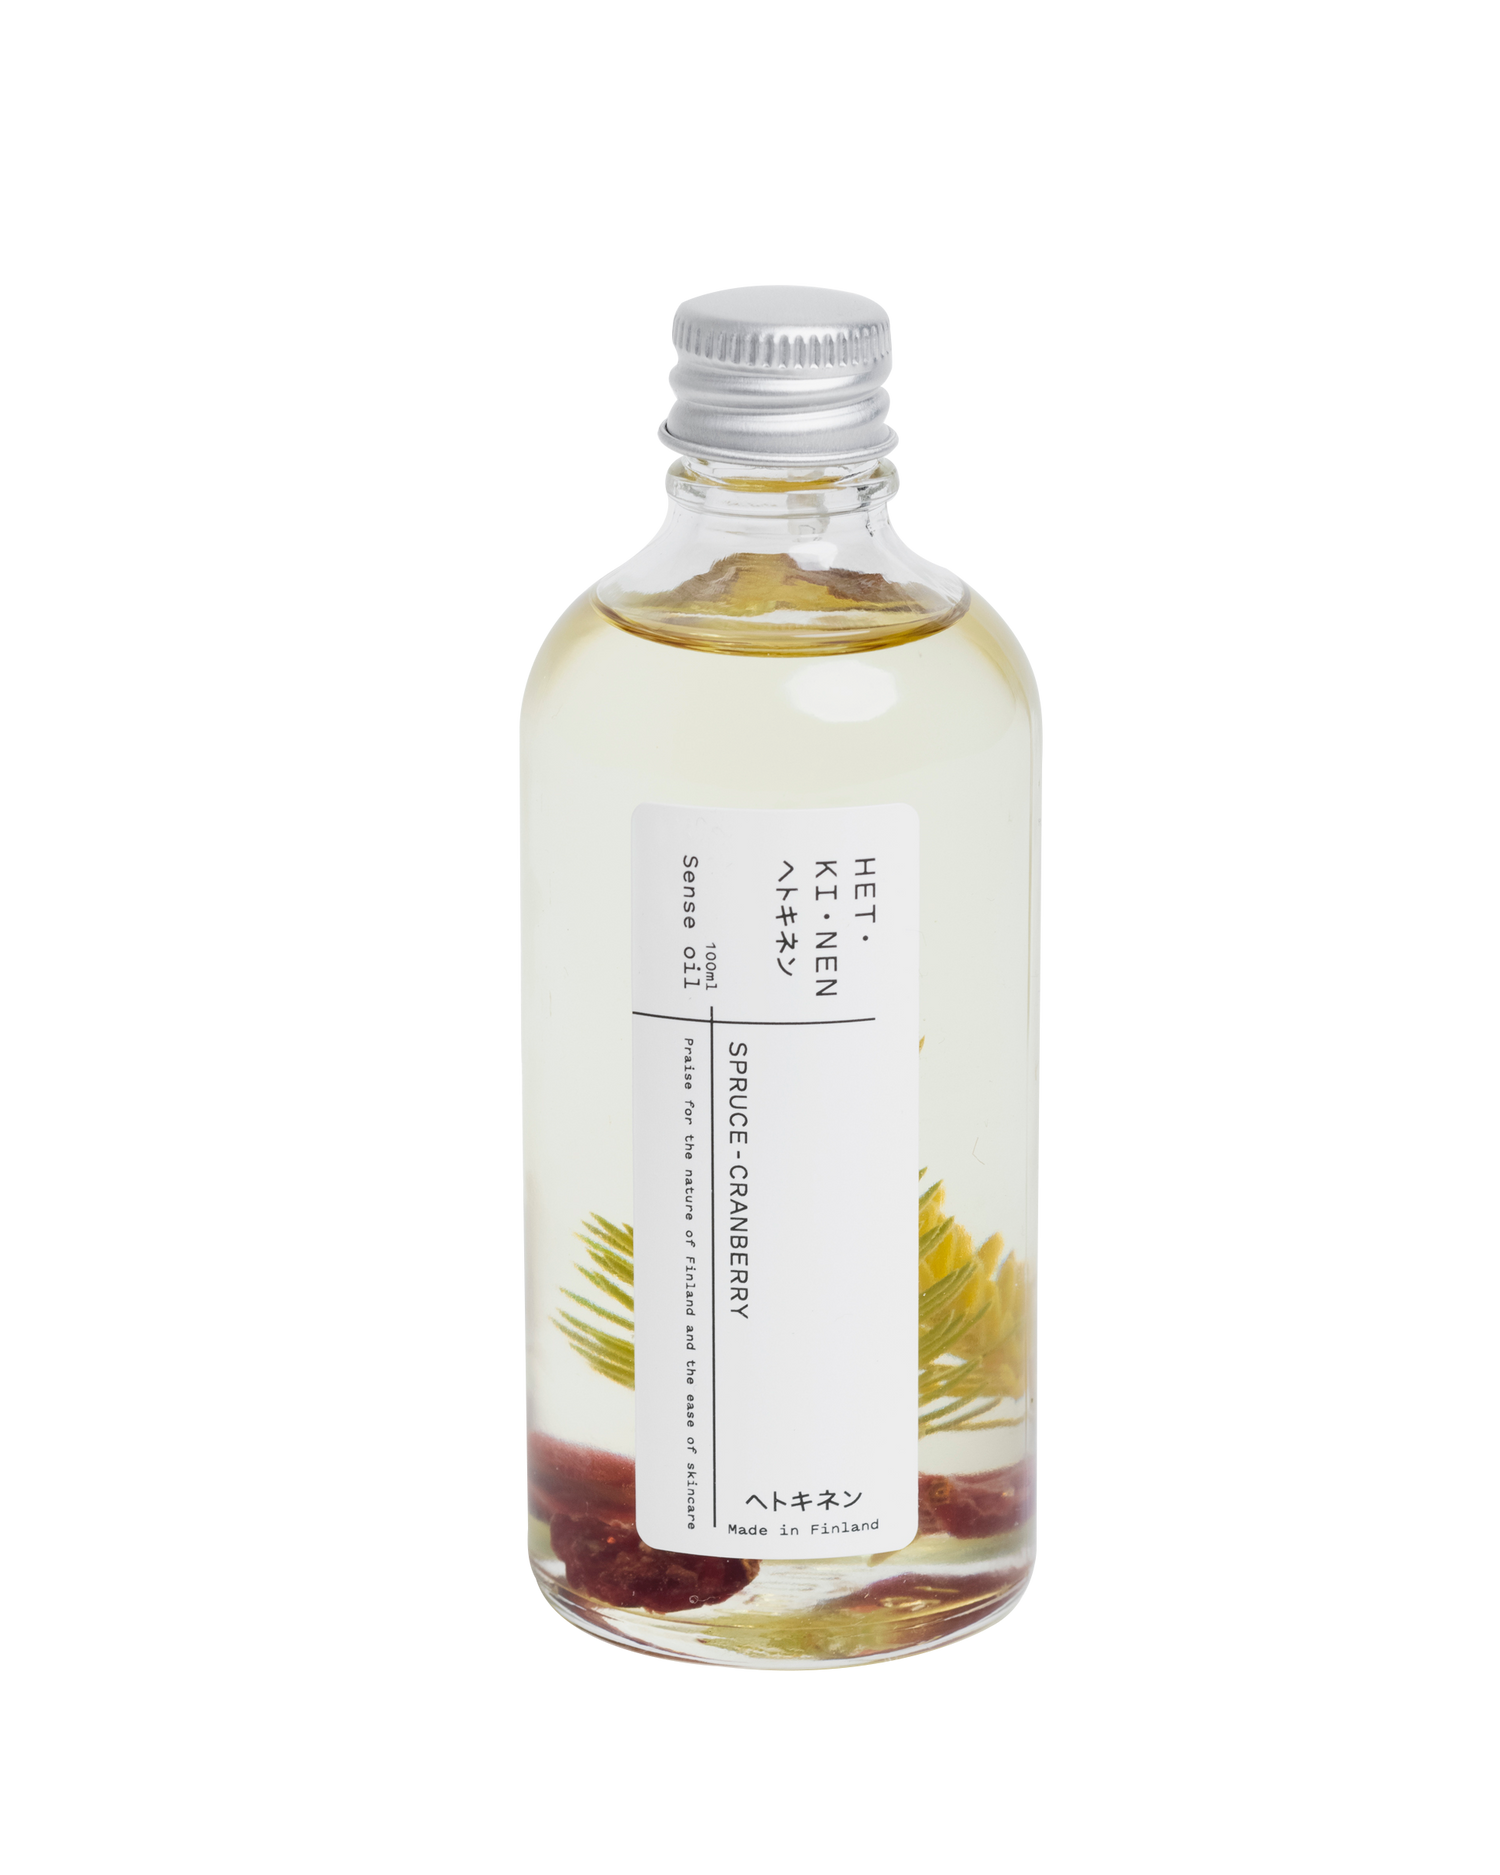 spruce-cranberry sense oil